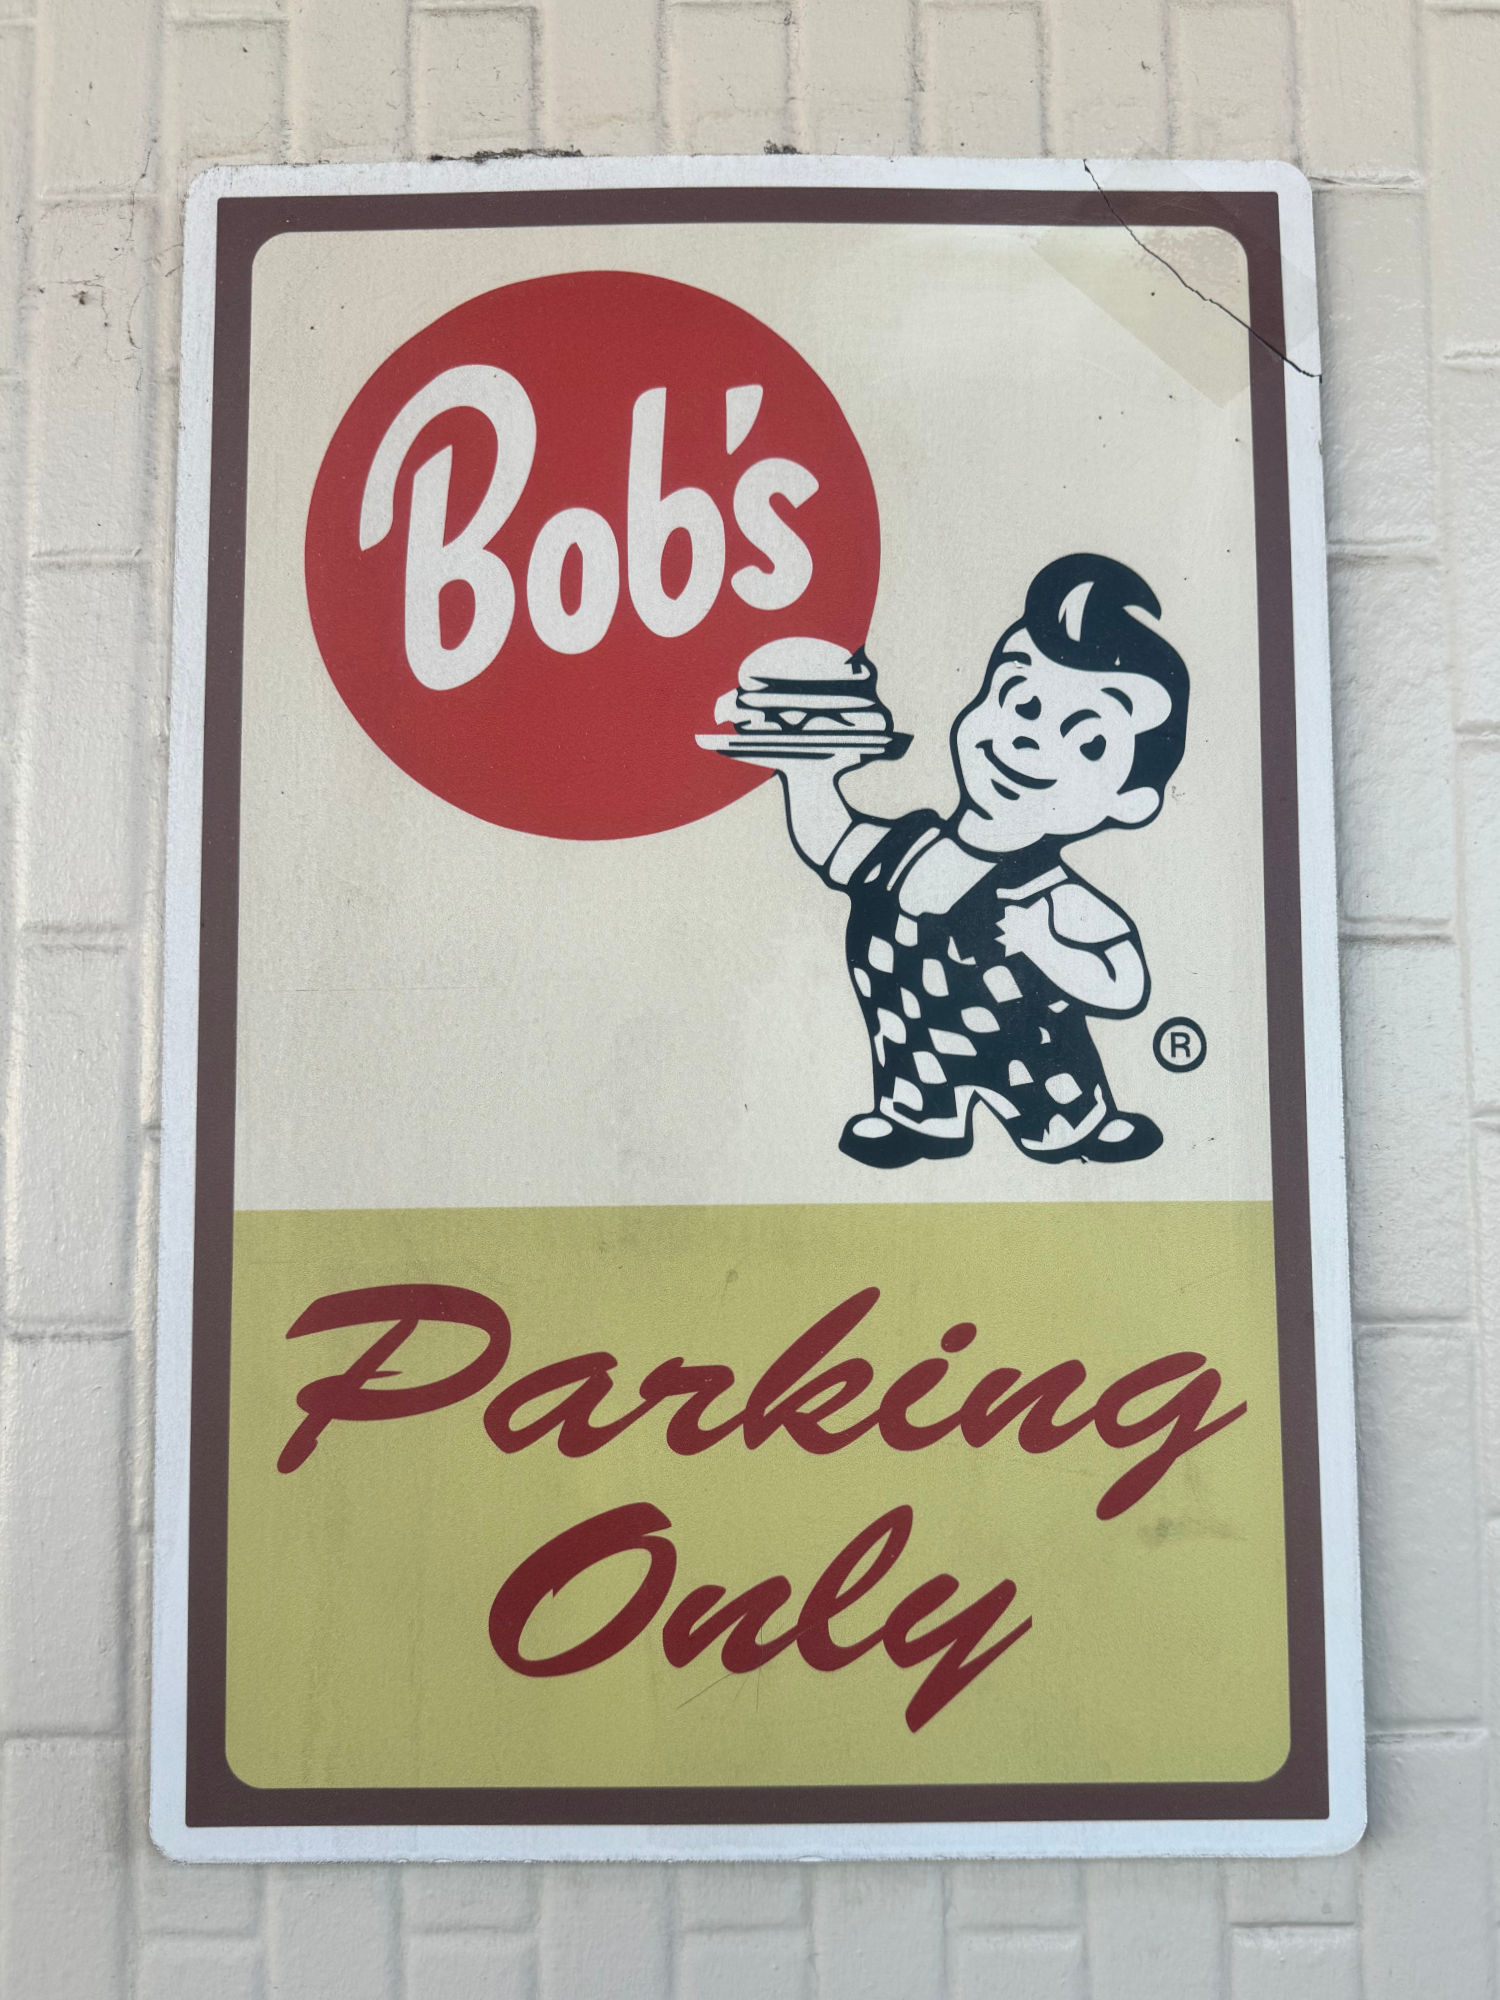 Bob's Big Boy Parking Only